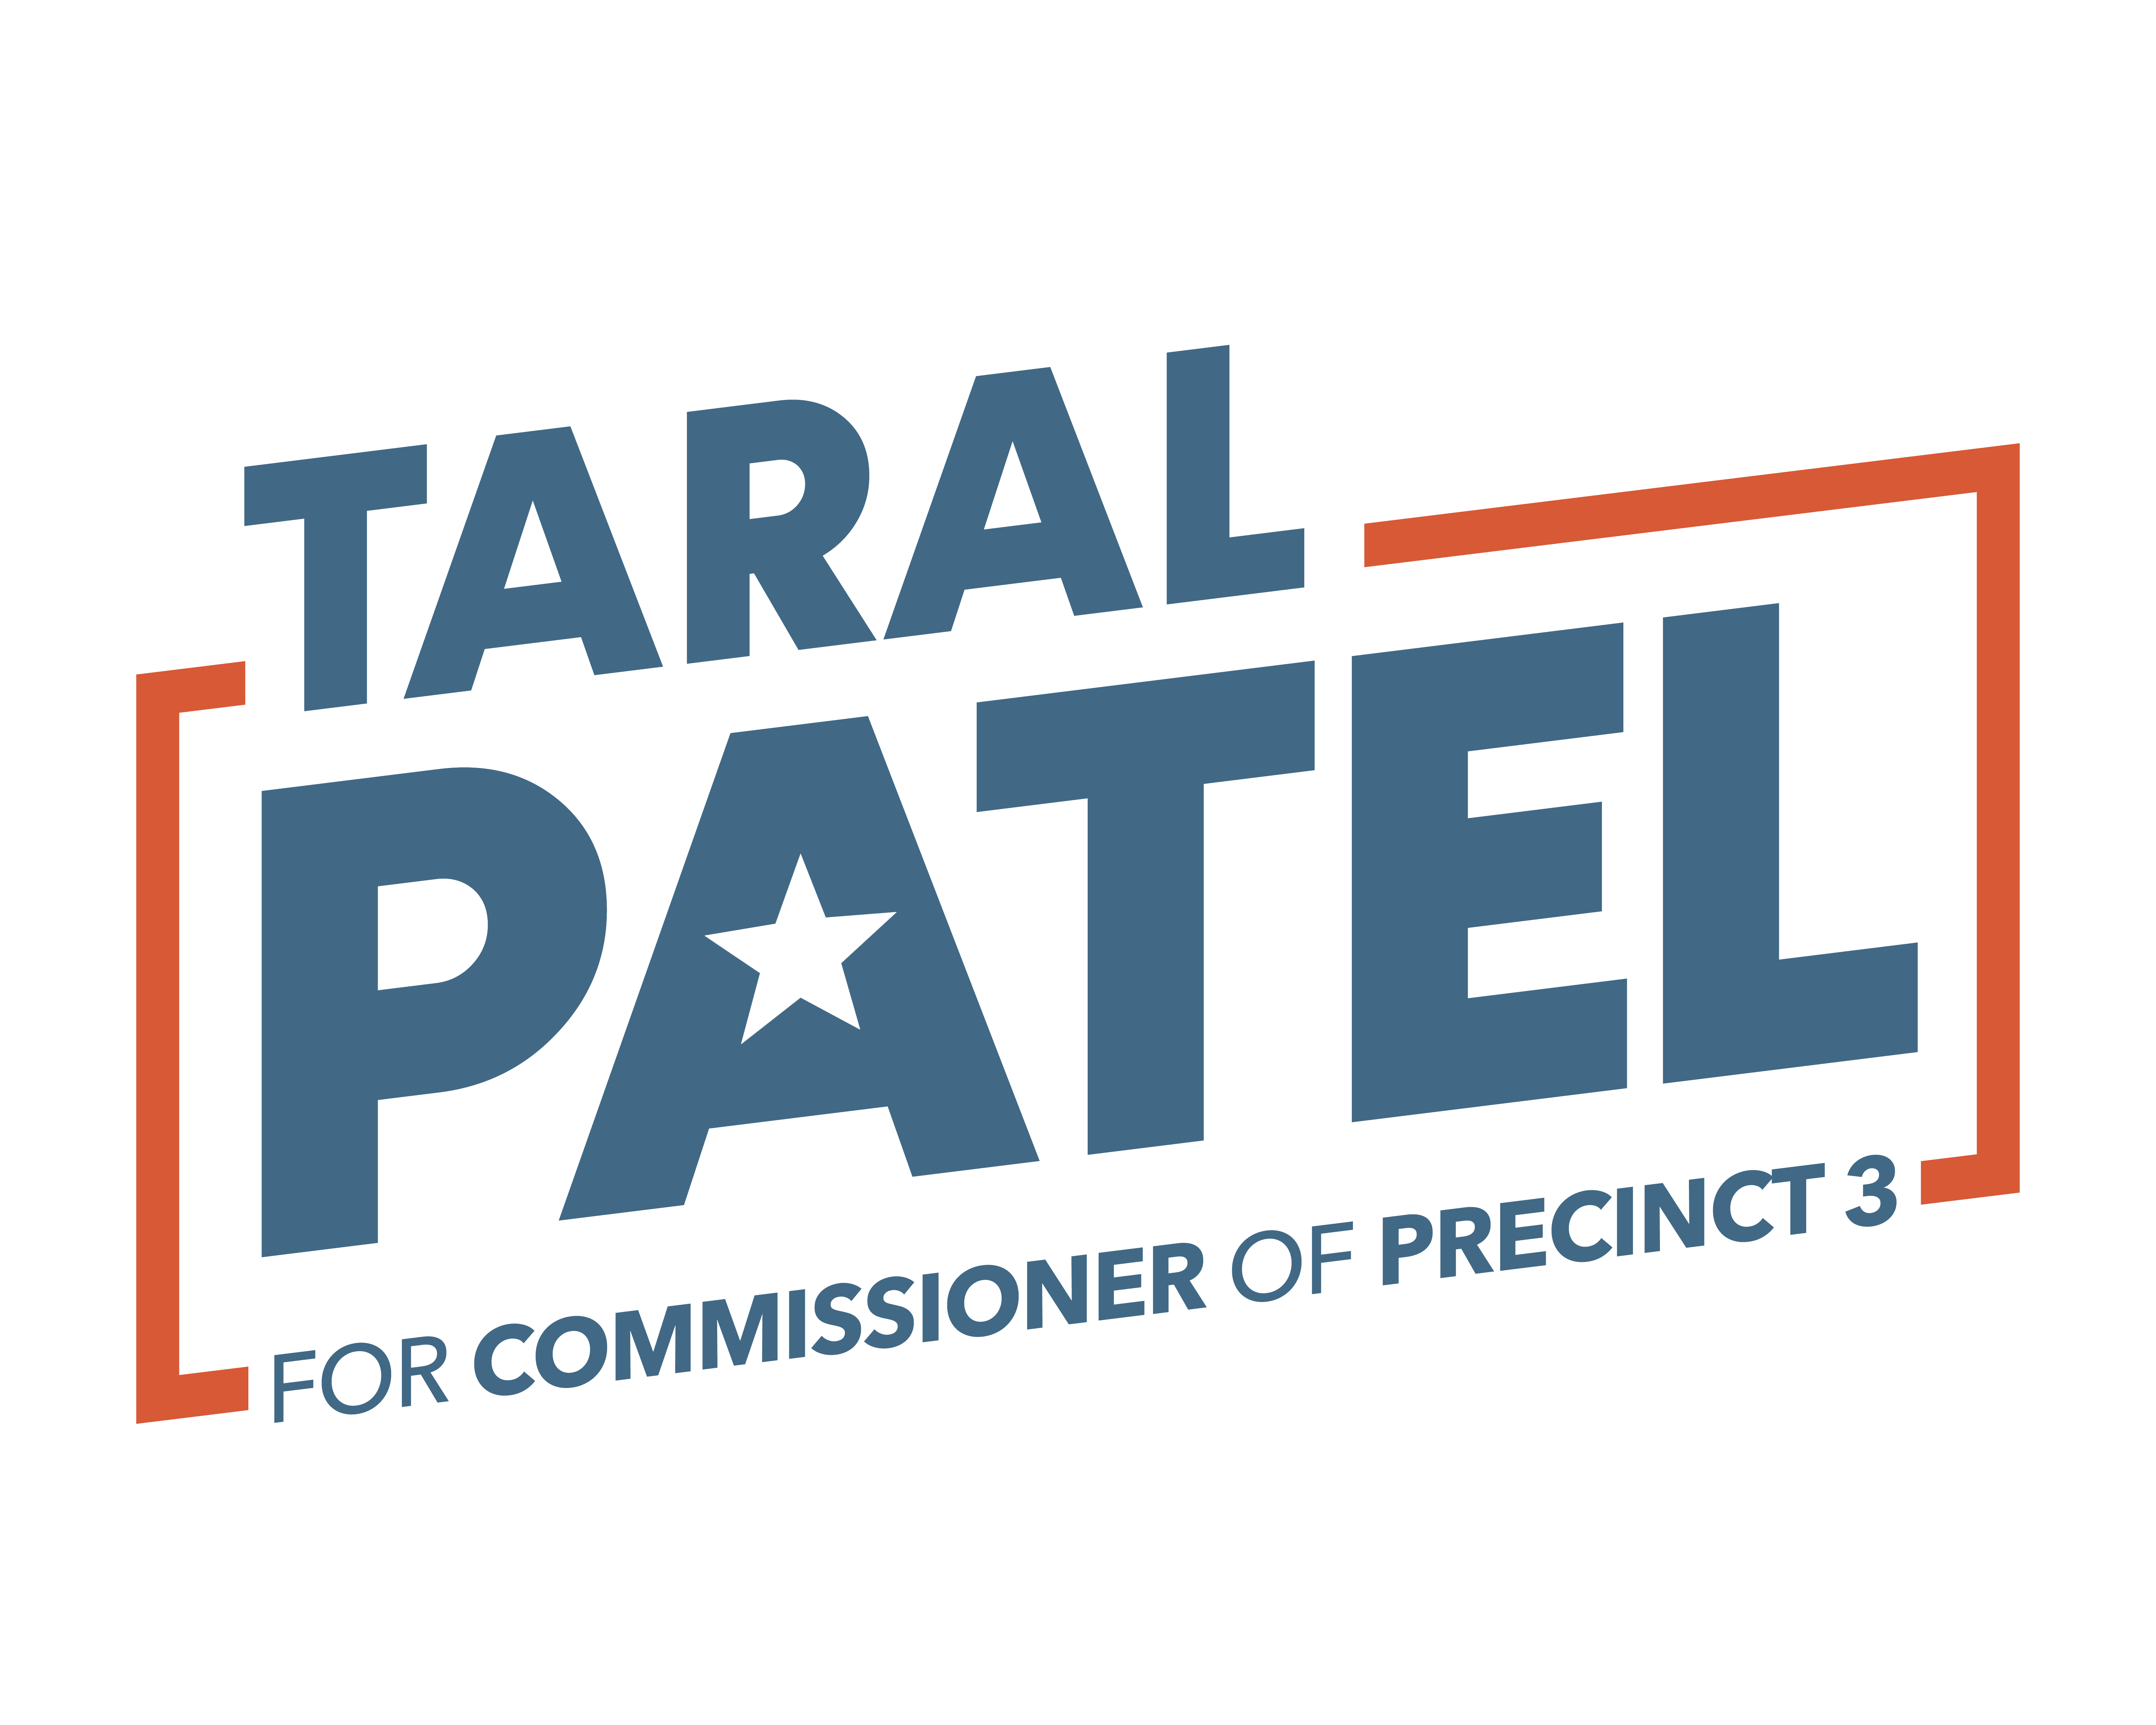 Patel Group Logo by Akhtar Khan on Dribbble